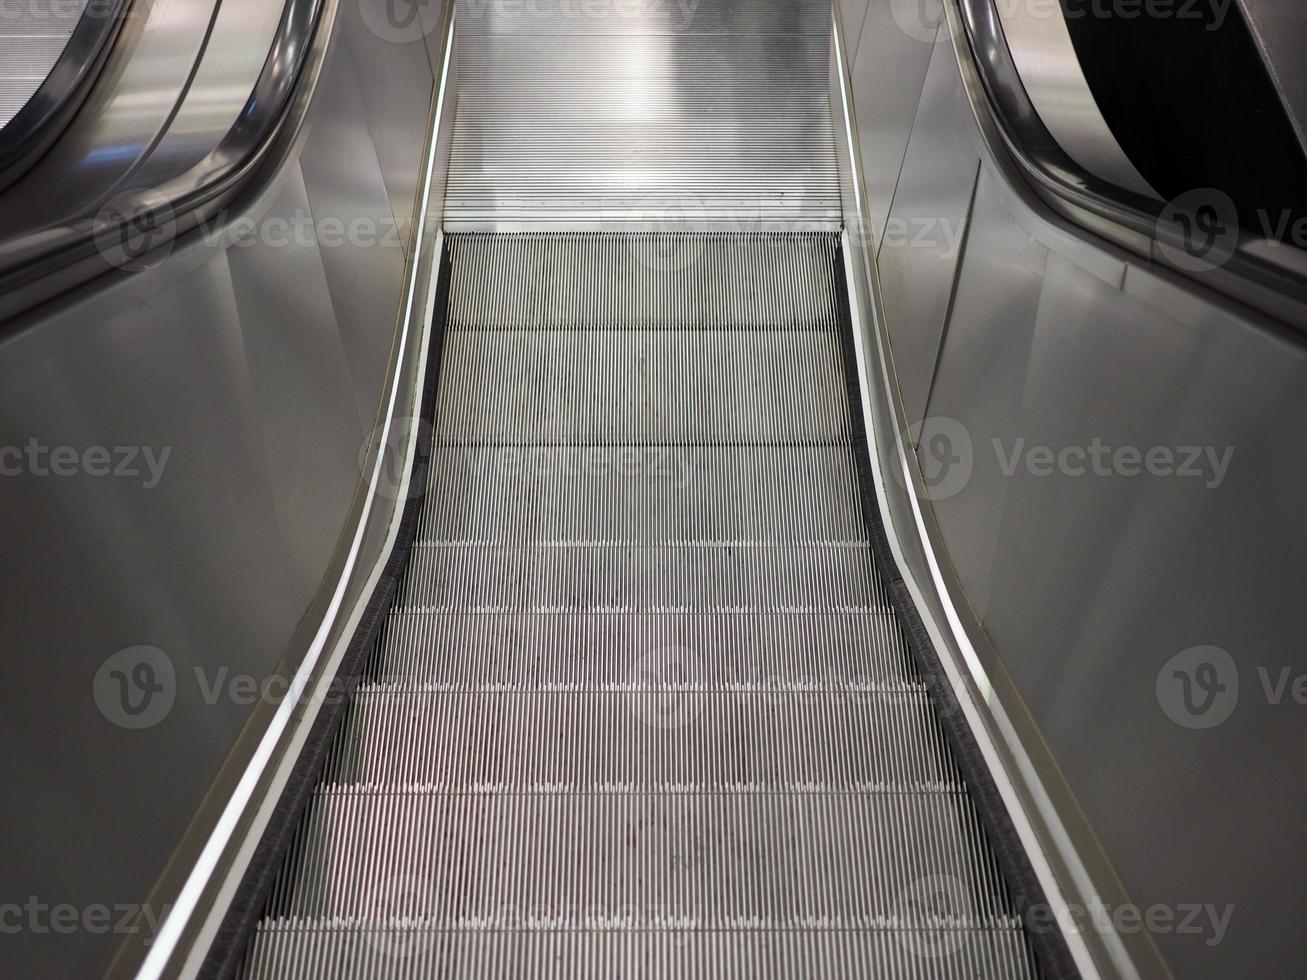 escaliers d'escalator de métro photo